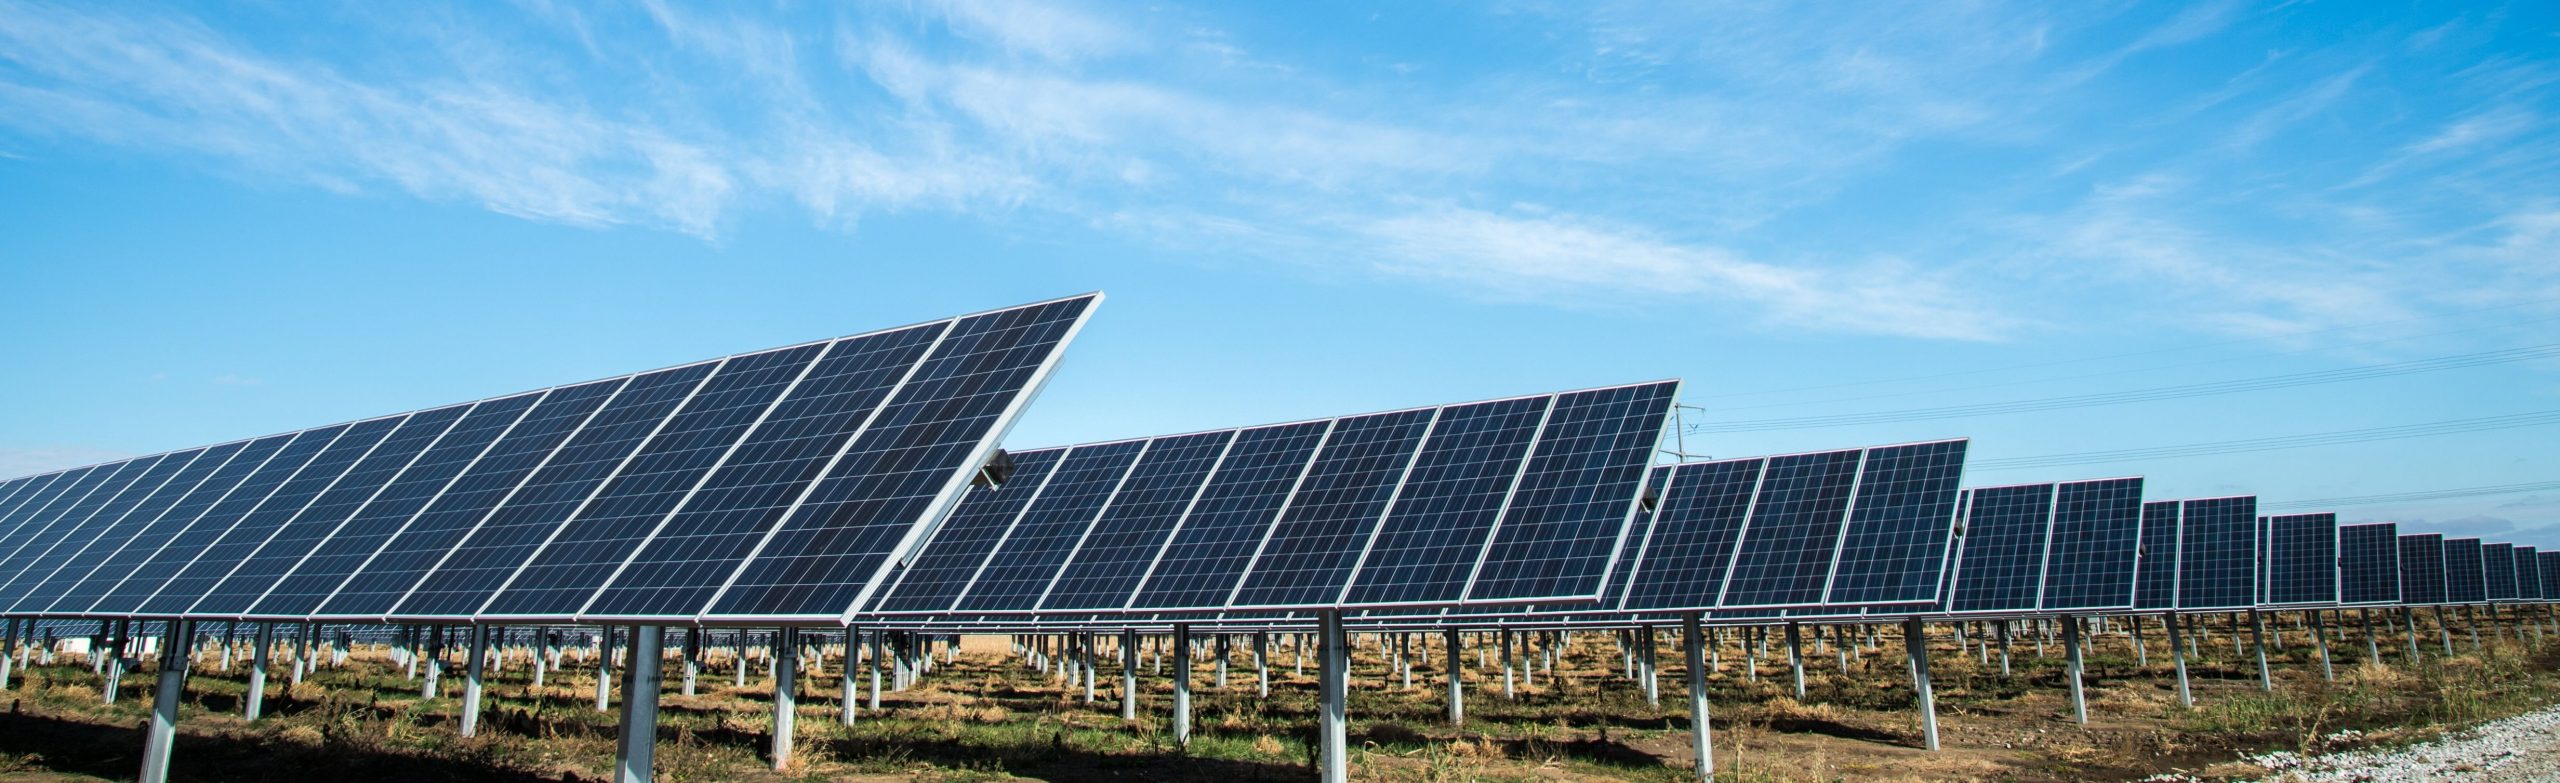 leaSoft S- olar panels renewable energies